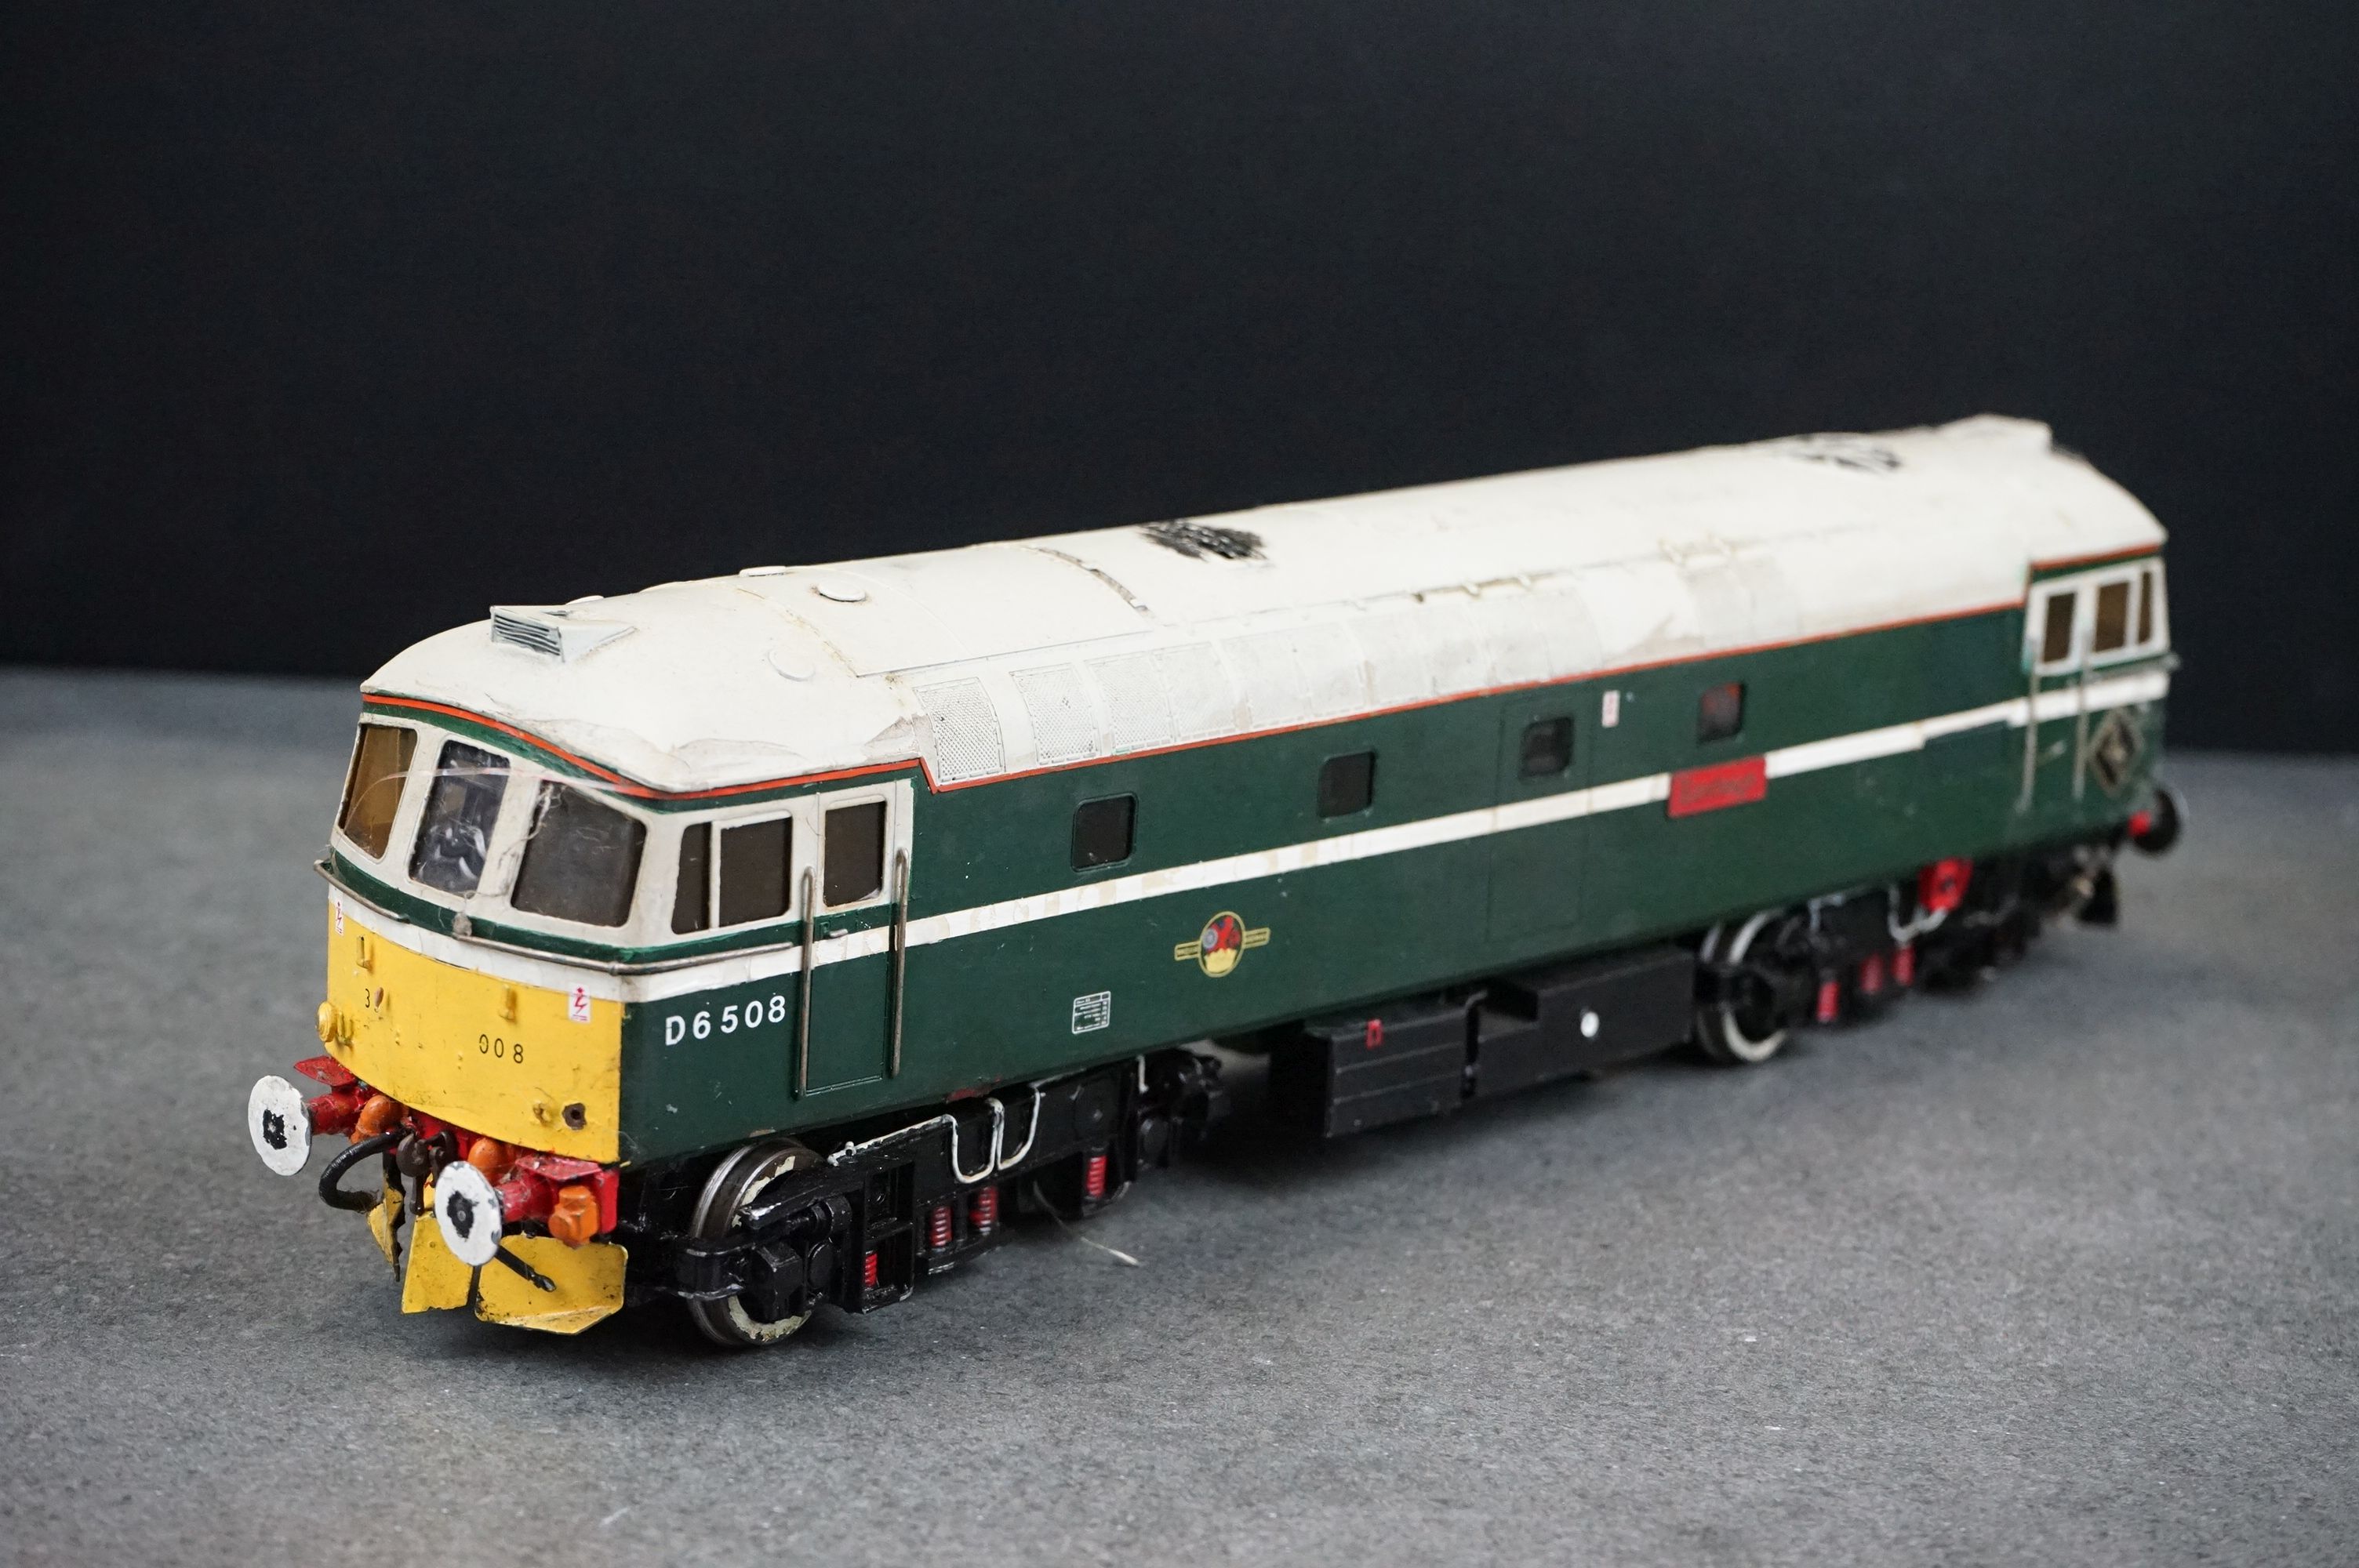 Kit built O gauge D6508 Eastleigh BR Diesel locomotive in green livery, metal construction, - Image 4 of 6